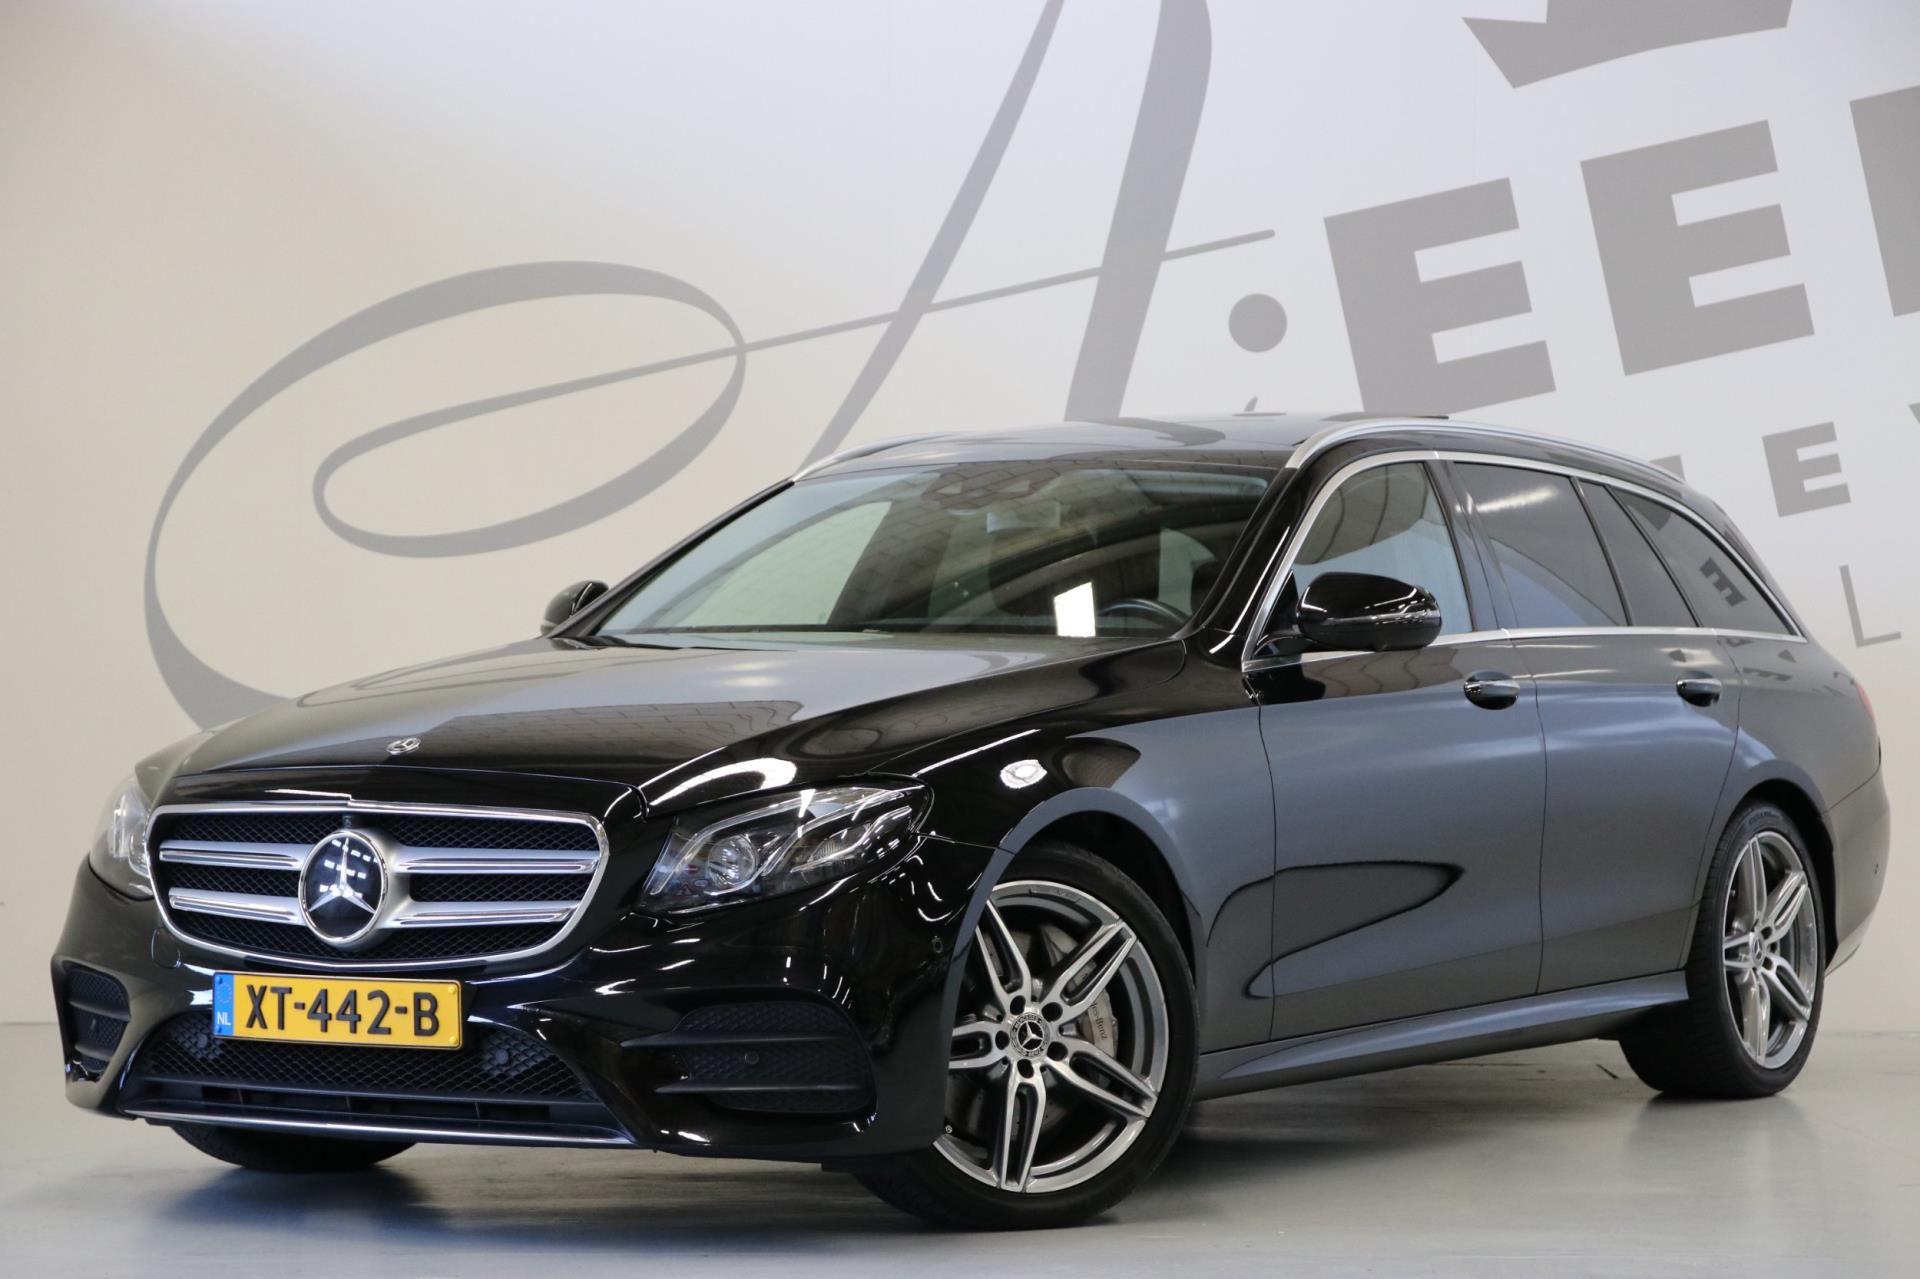 Mercedes-Benz E-klasse Estate occasion - Aeen Exclusieve Automobielen